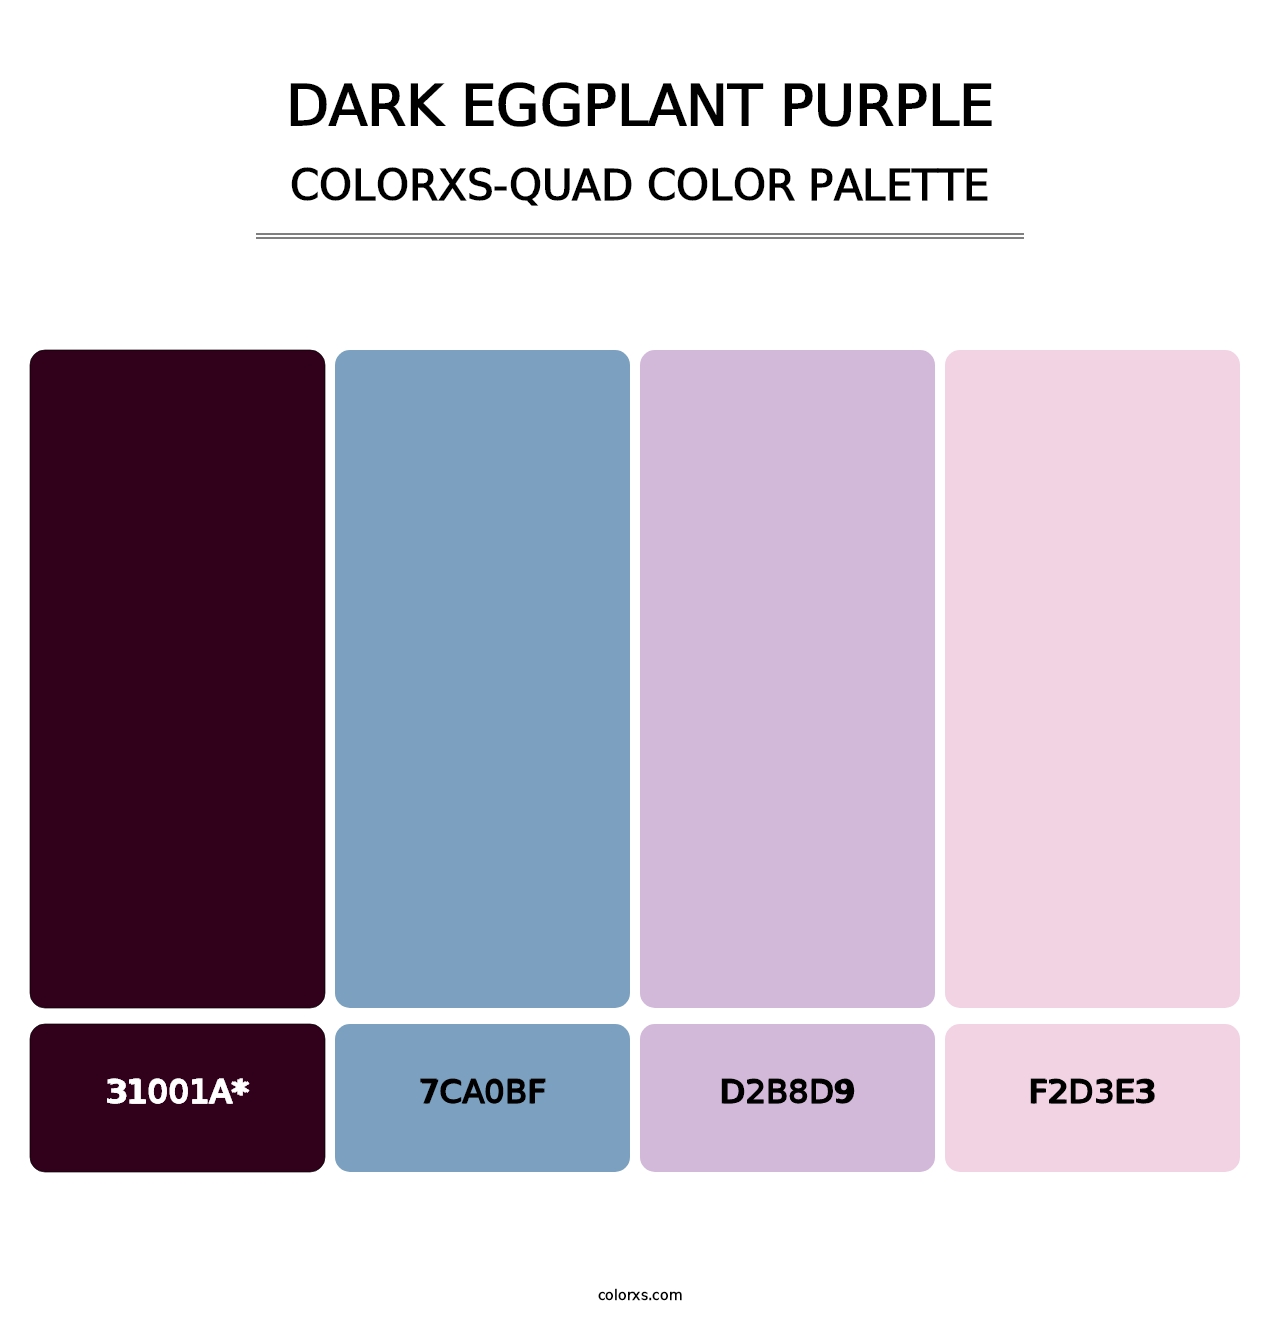 Dark Eggplant Purple - Colorxs Quad Palette